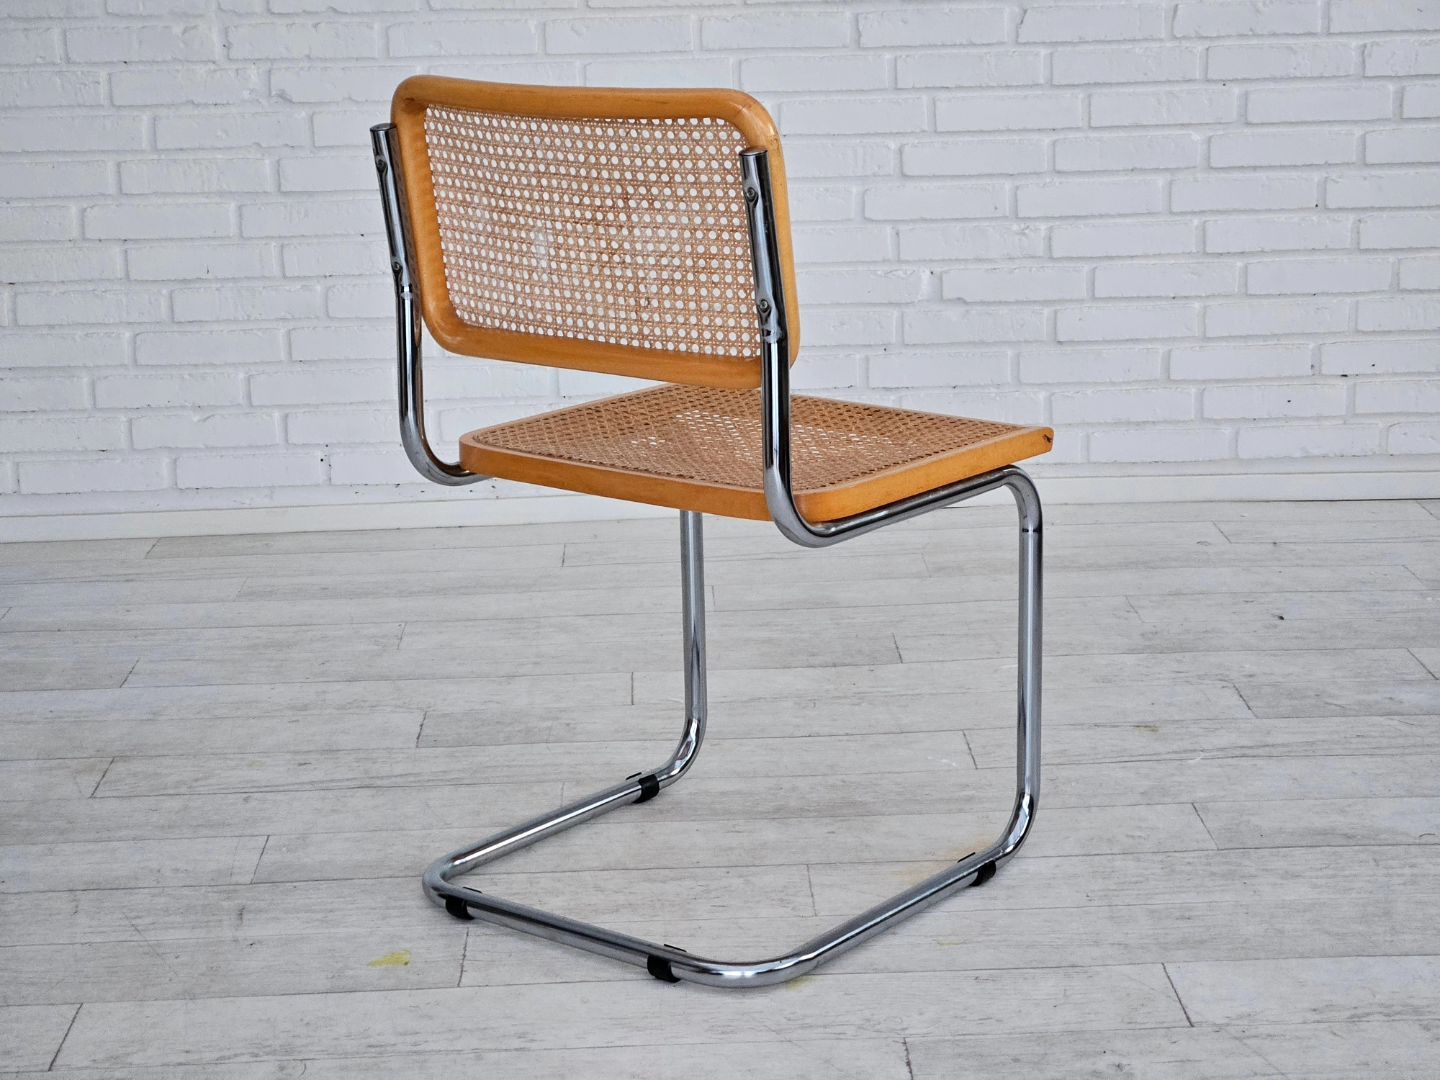 1980s, Italian design, set of 8 chairs, original good condition.